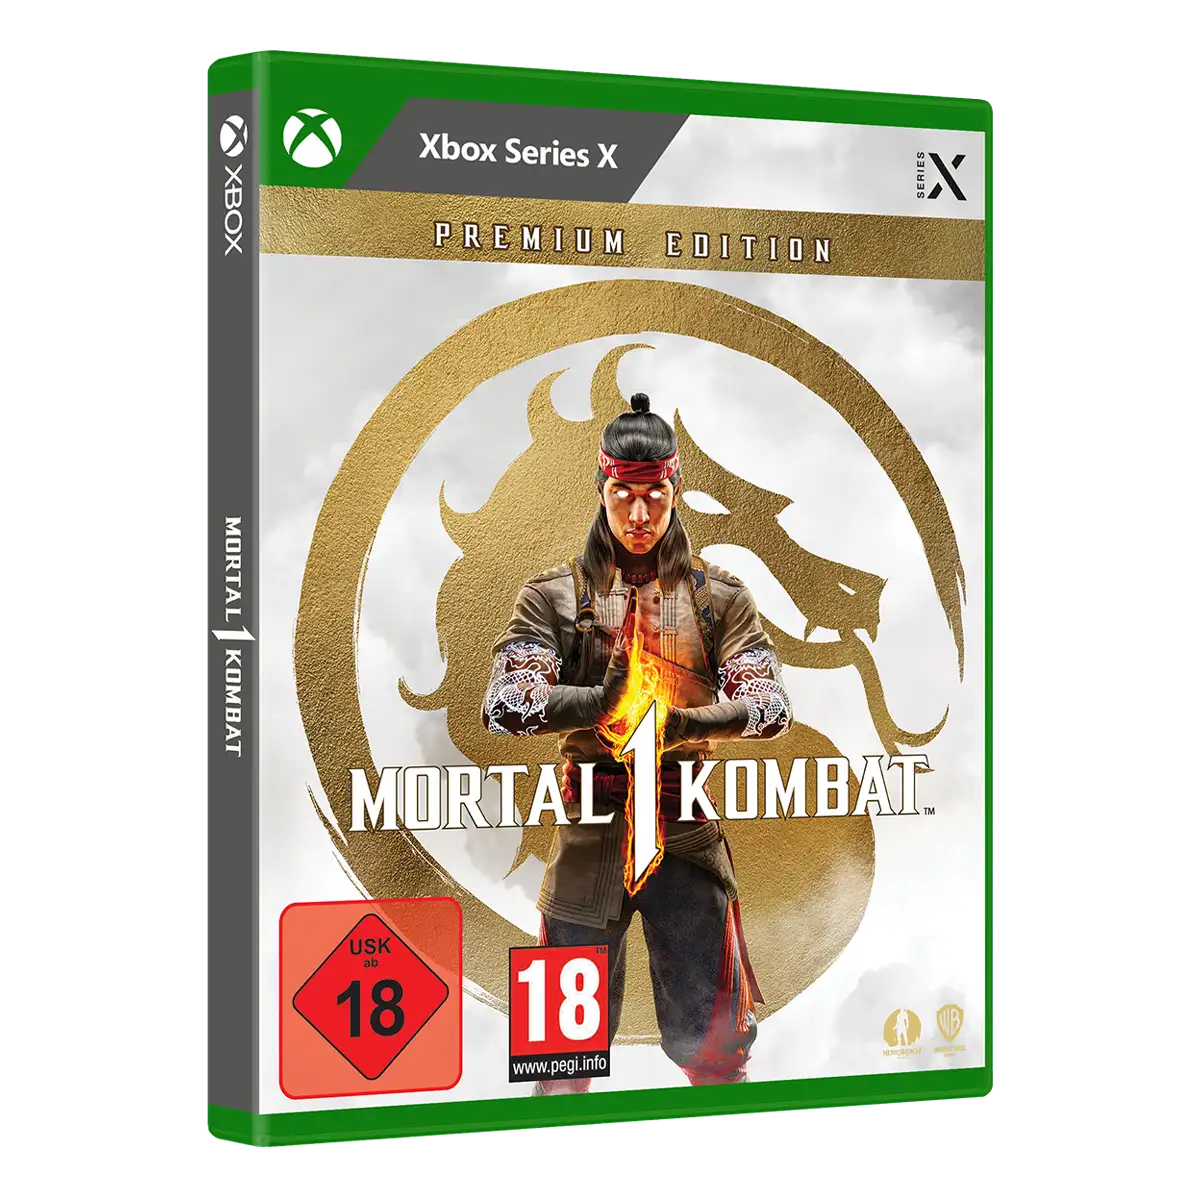 Mortal Kombat 1 Premium Edition (Xbox Series X) Image 2